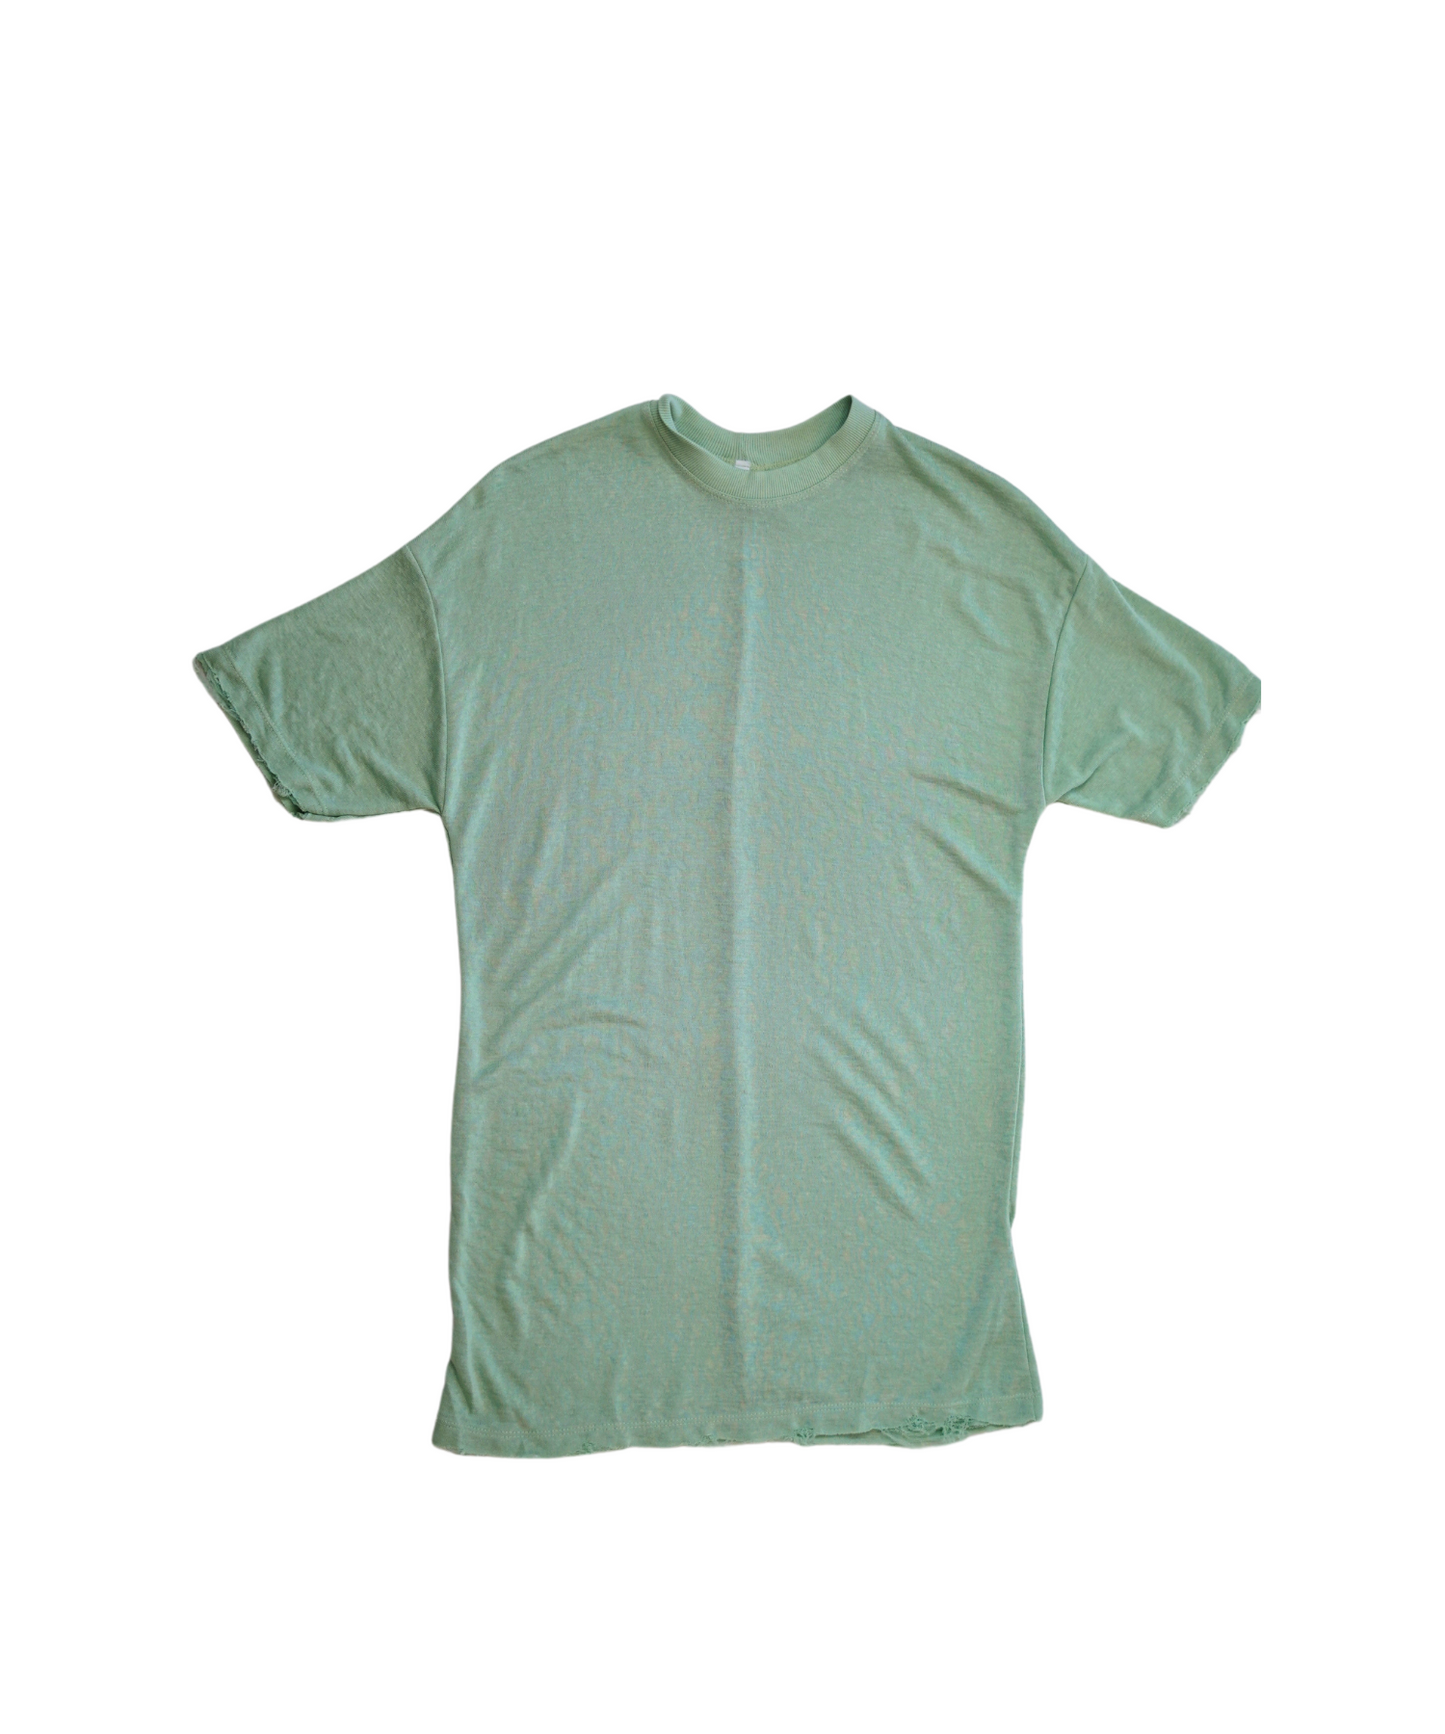 Artchimia l basic resort shirt